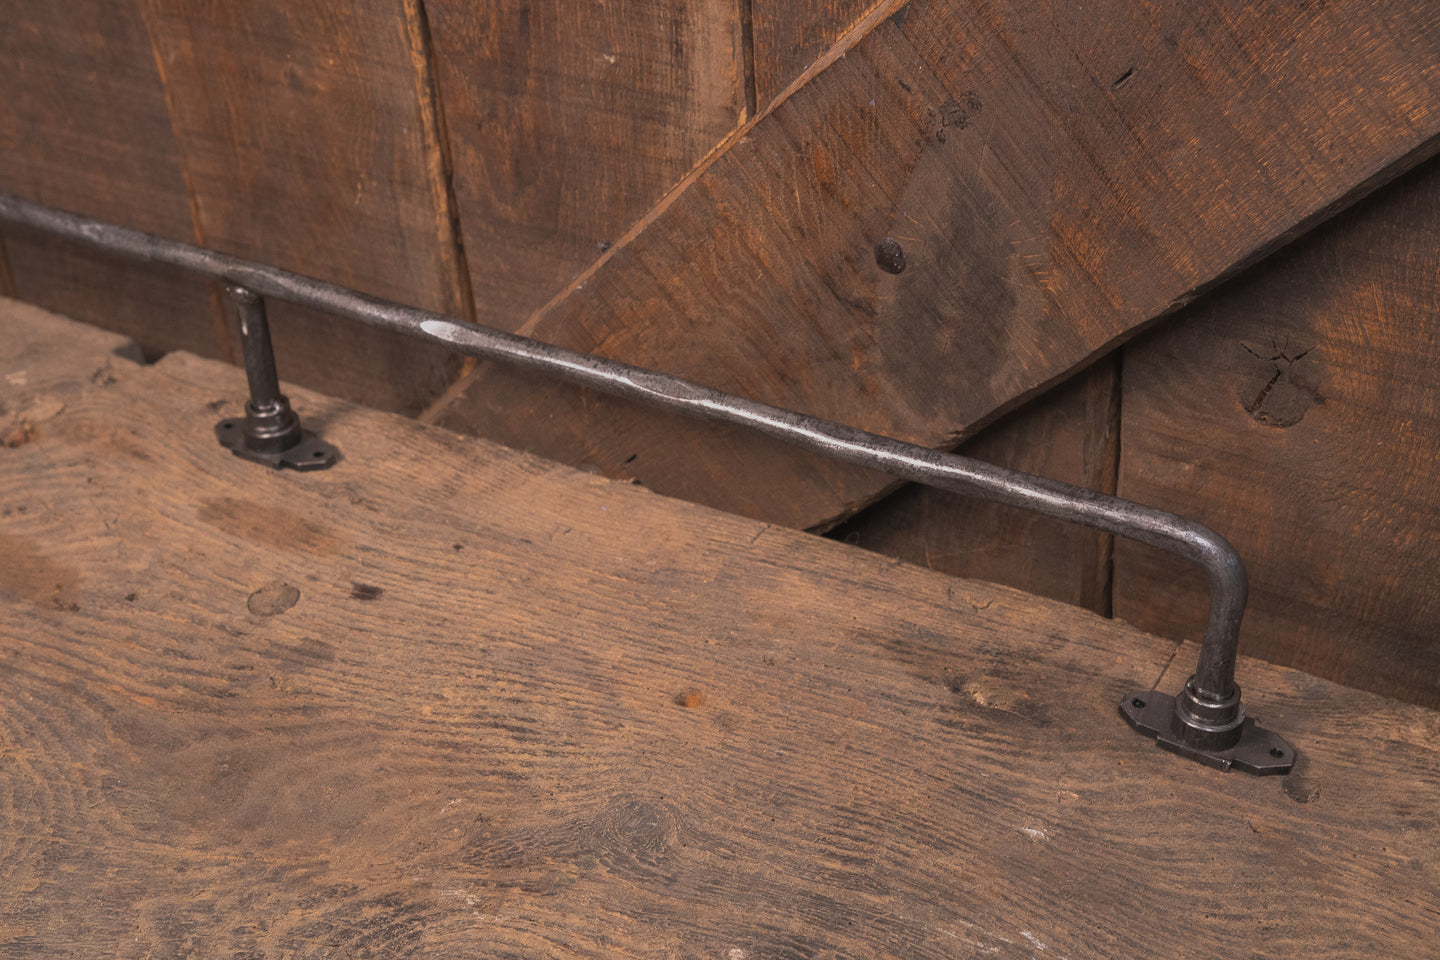 Steel Foot rail for Home bar